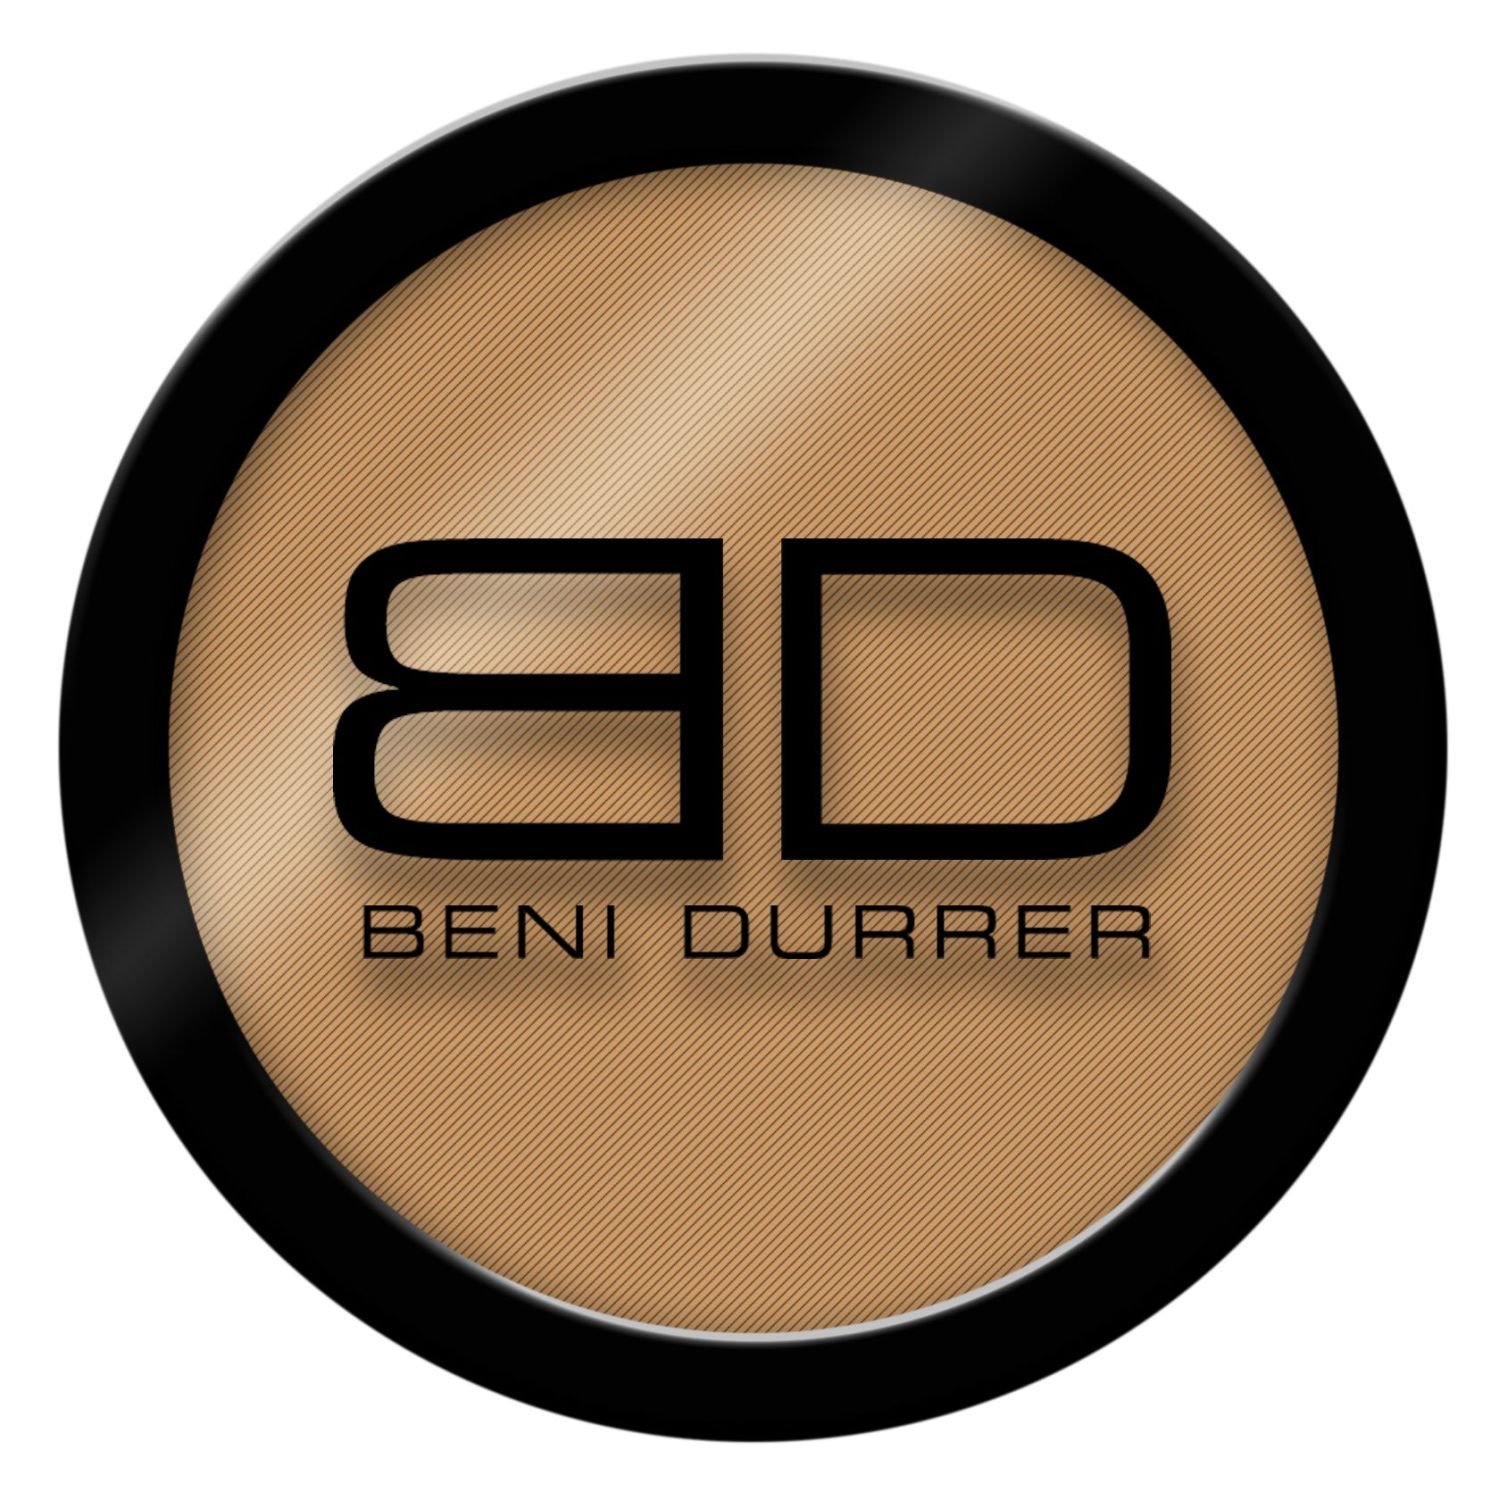 Beni Durrer Make-up N 09, roter Ton, 15 g